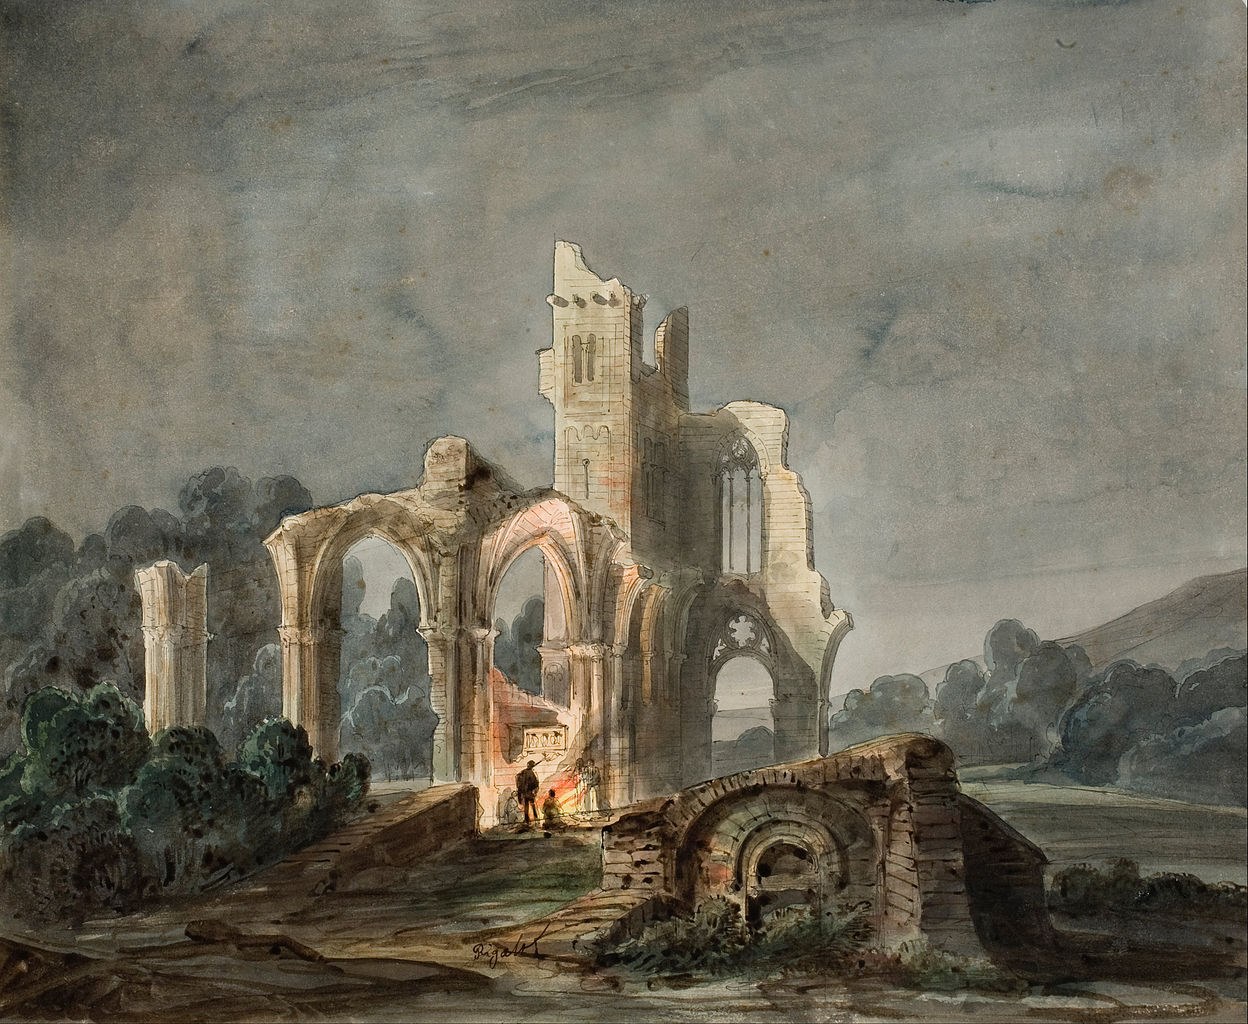 gothic ruins